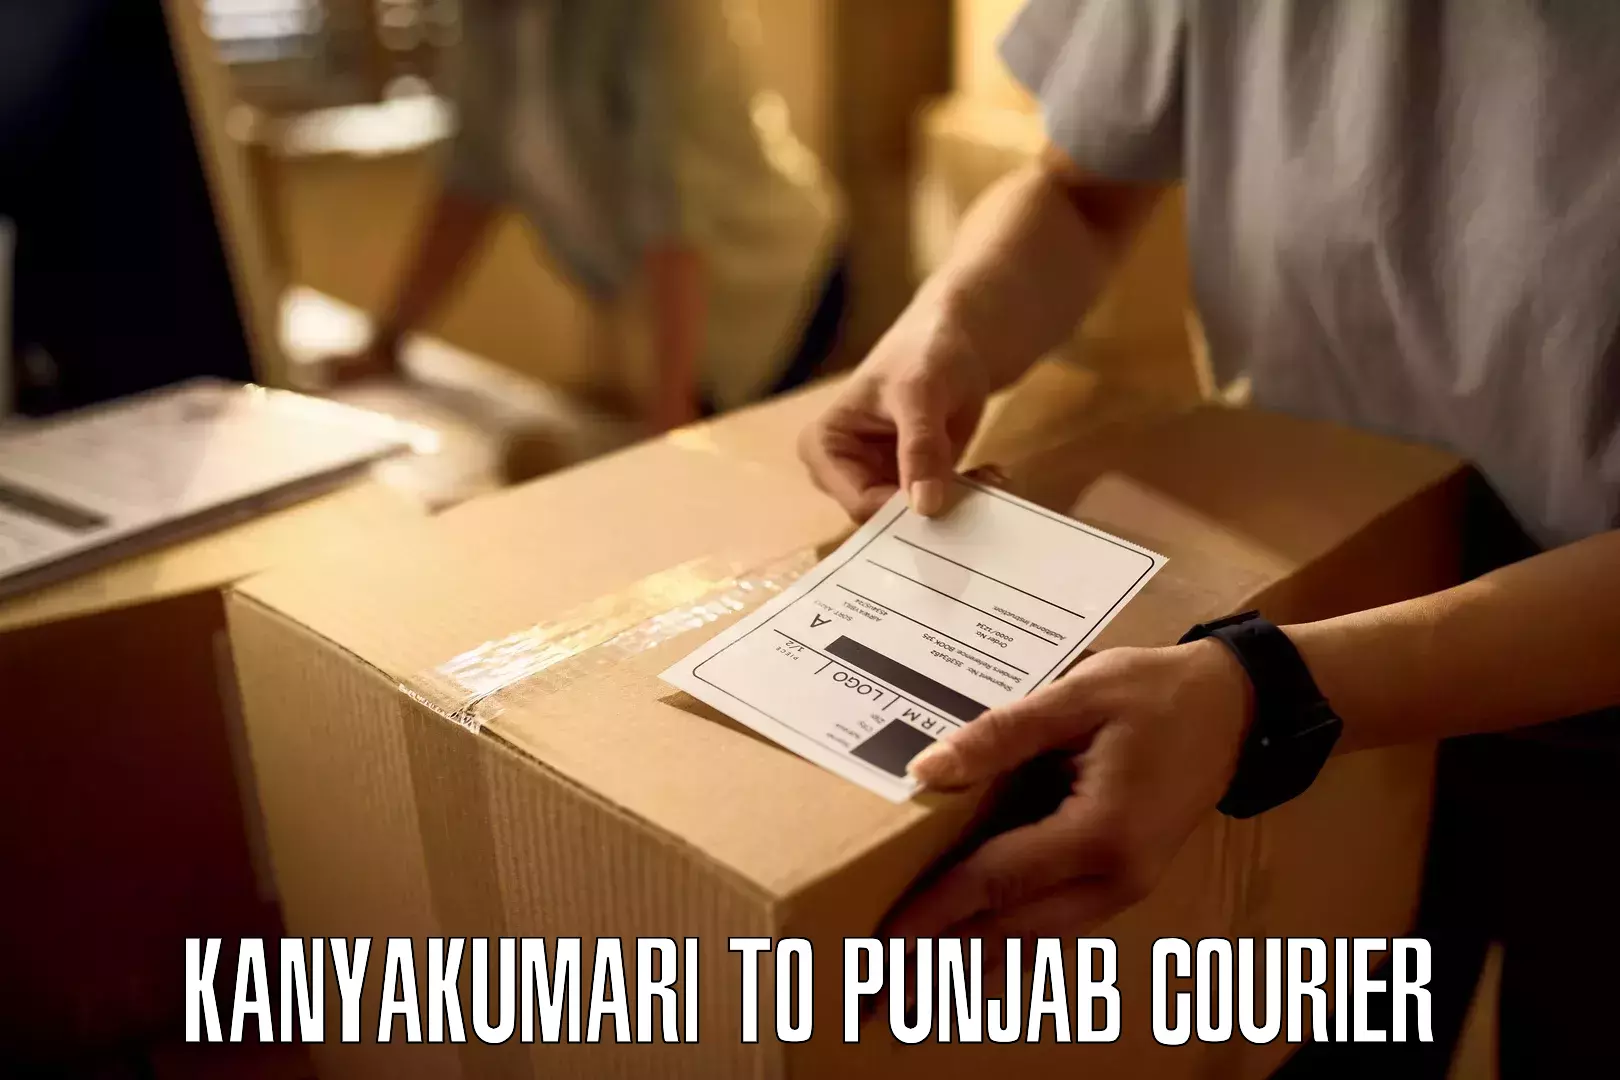 Nationwide delivery network Kanyakumari to Punjab